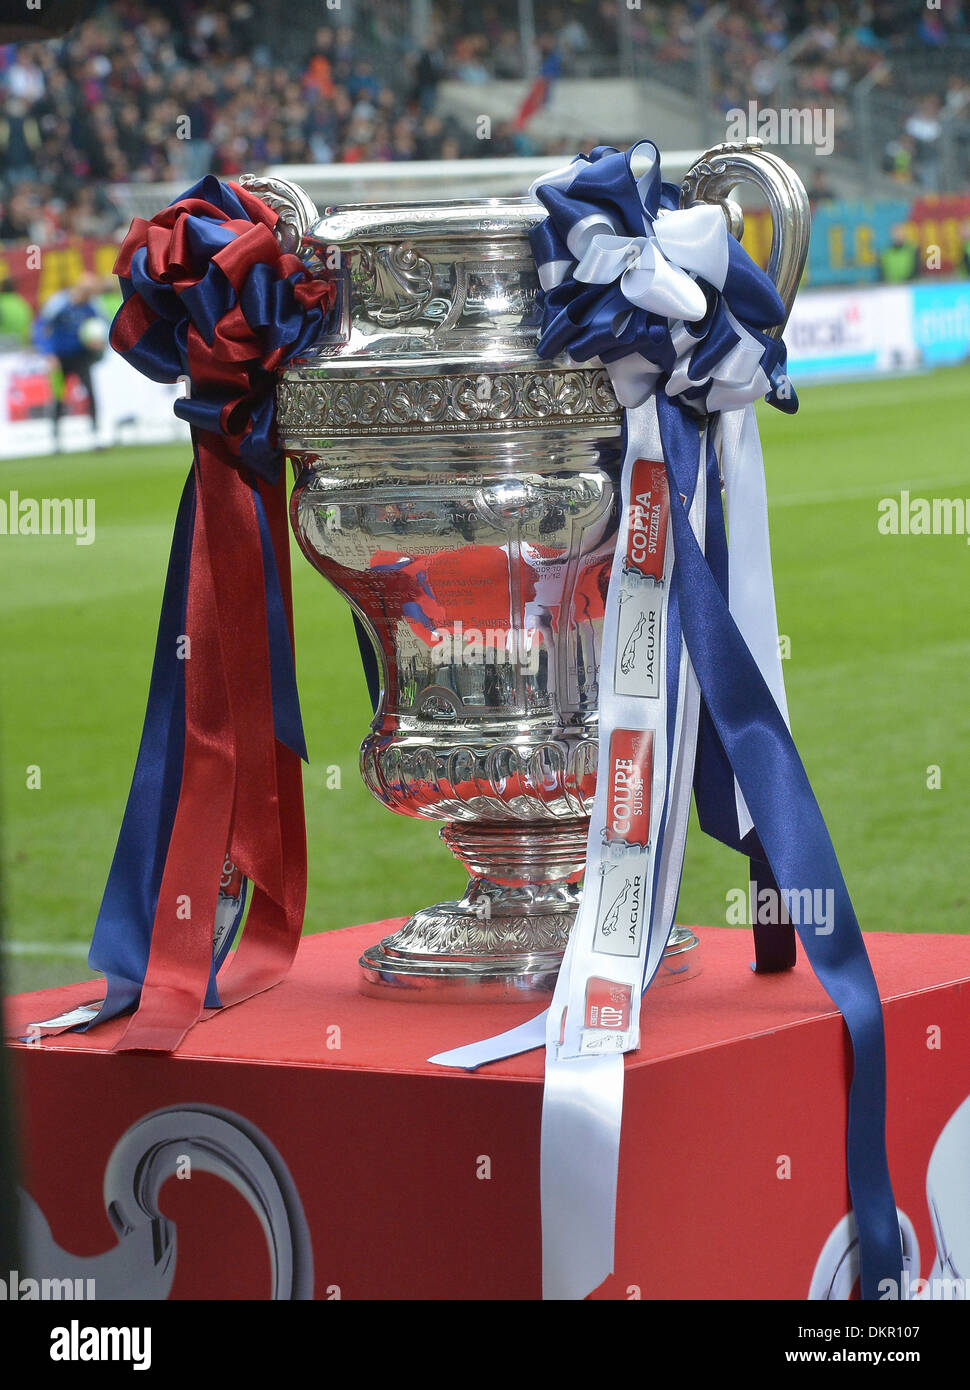 Football, Soccer, sport, Switzerland, cup, Final, trophy, Stade de Suisse, Bern Stock Photo